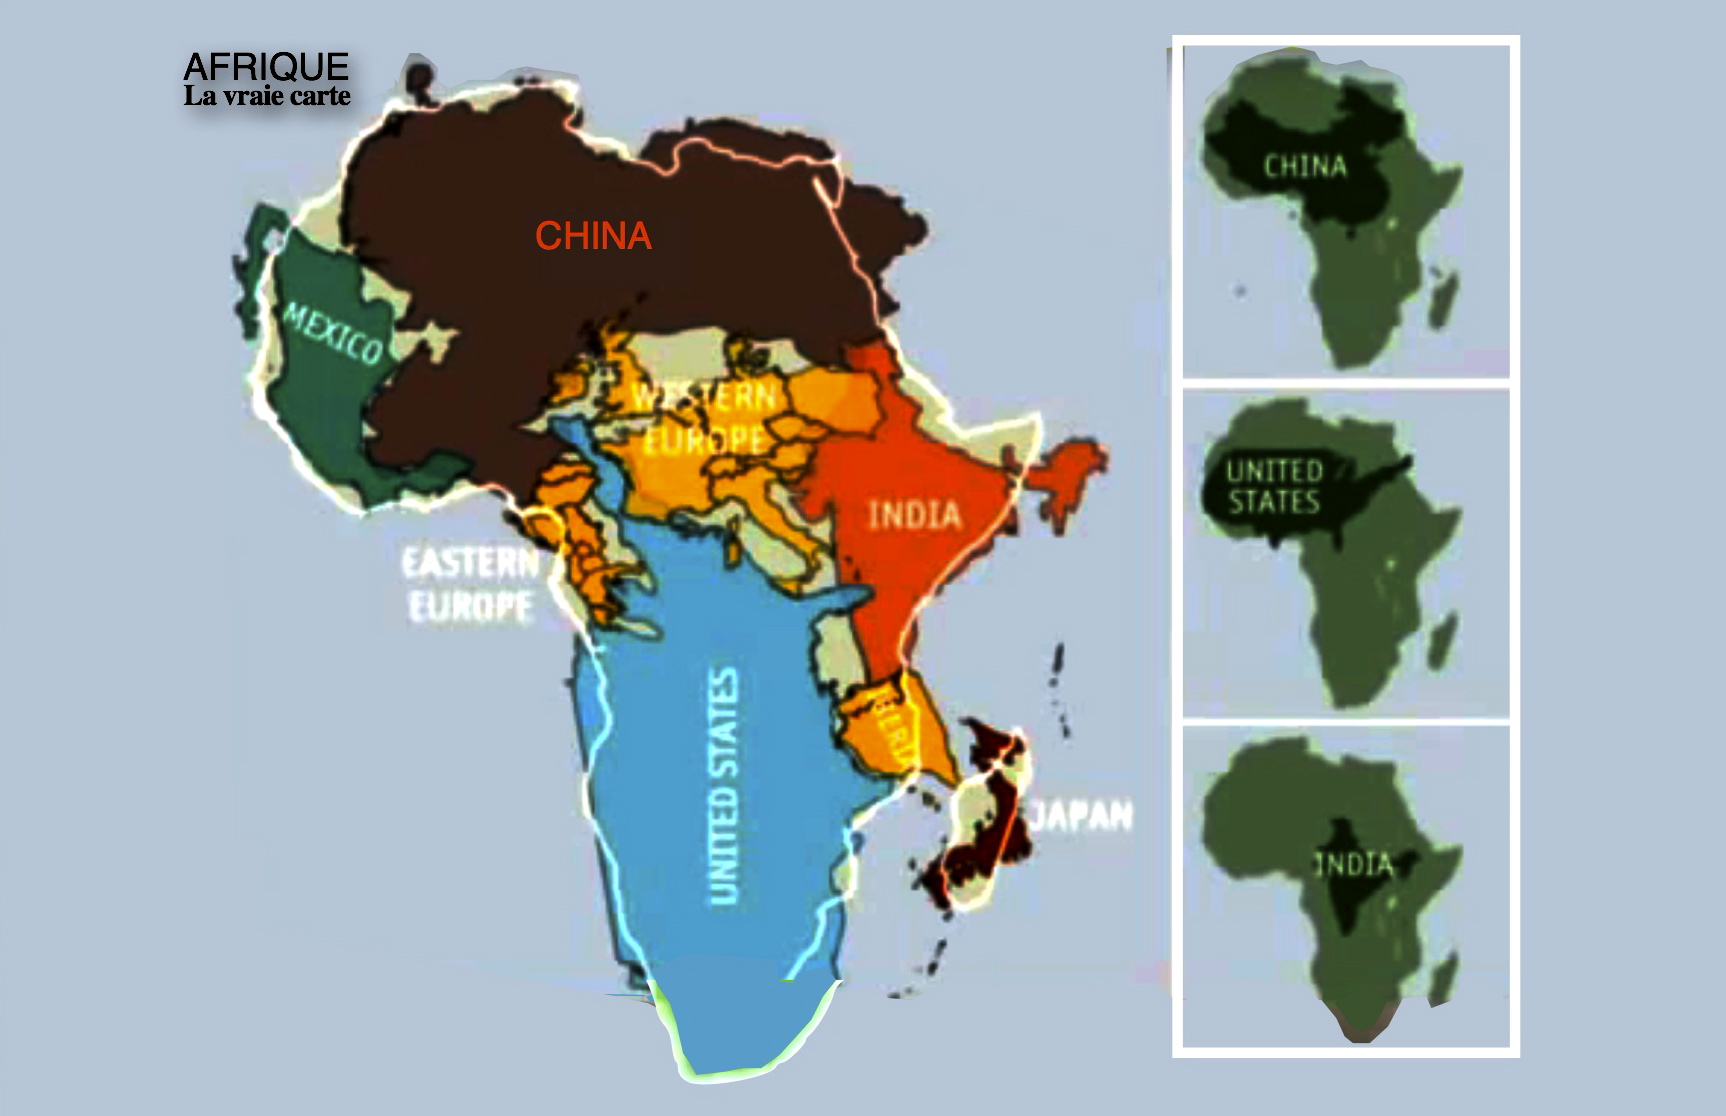 La vraie carte africaine